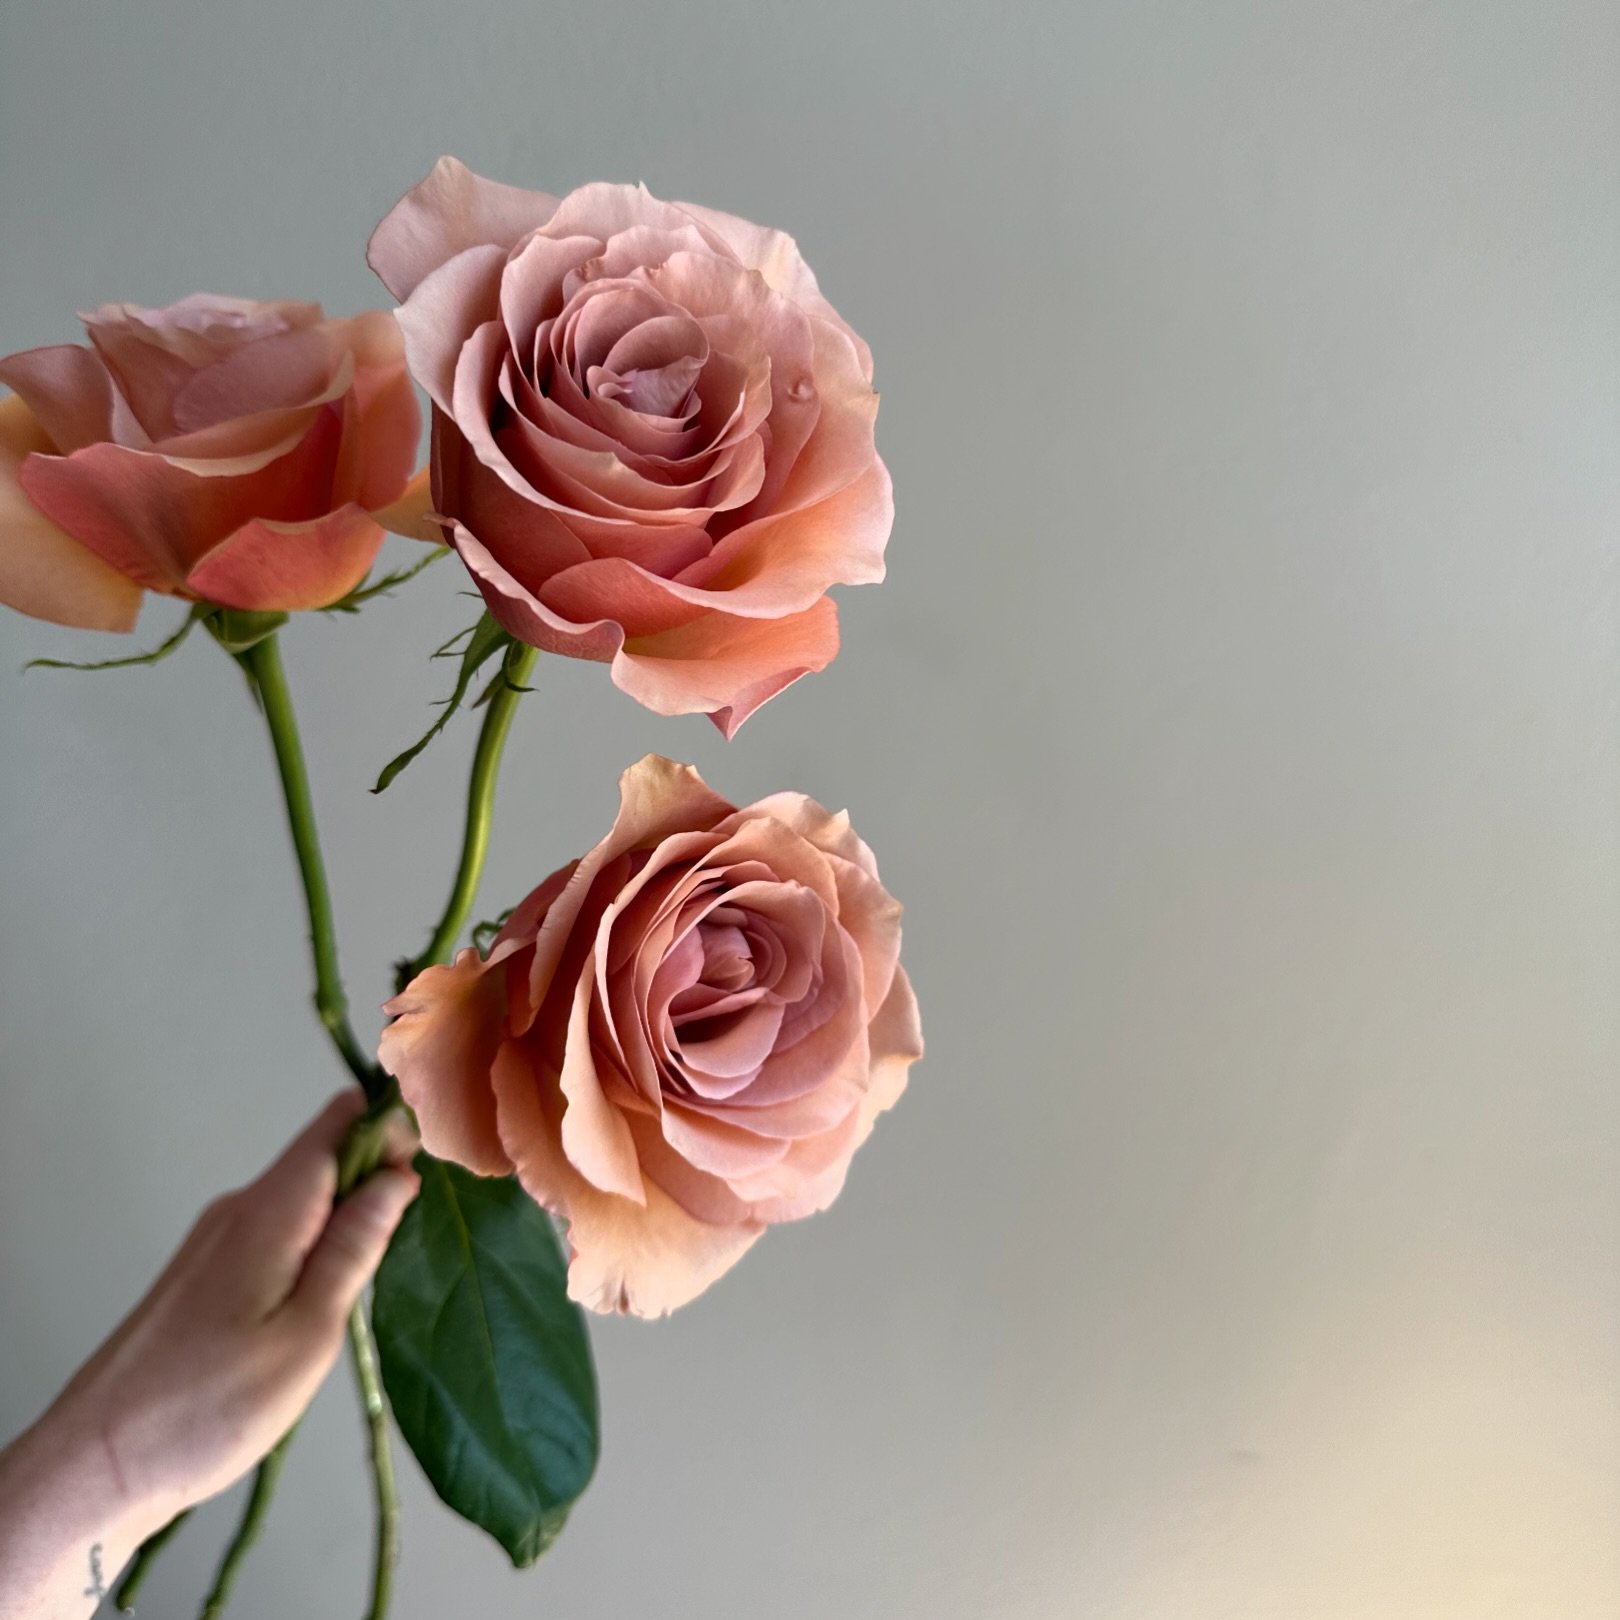 My favorite rose &quot;Moab&quot; 

She is stunning

.
.
.
#florist #flowers #brides2024 #brides2025 #chicago #chicagoflorist #mkeflorist #chiflorist #weddingflorist #eventflorist #weddinginspiration #flowersofinstagram #bridesbouquet #weddingflowers